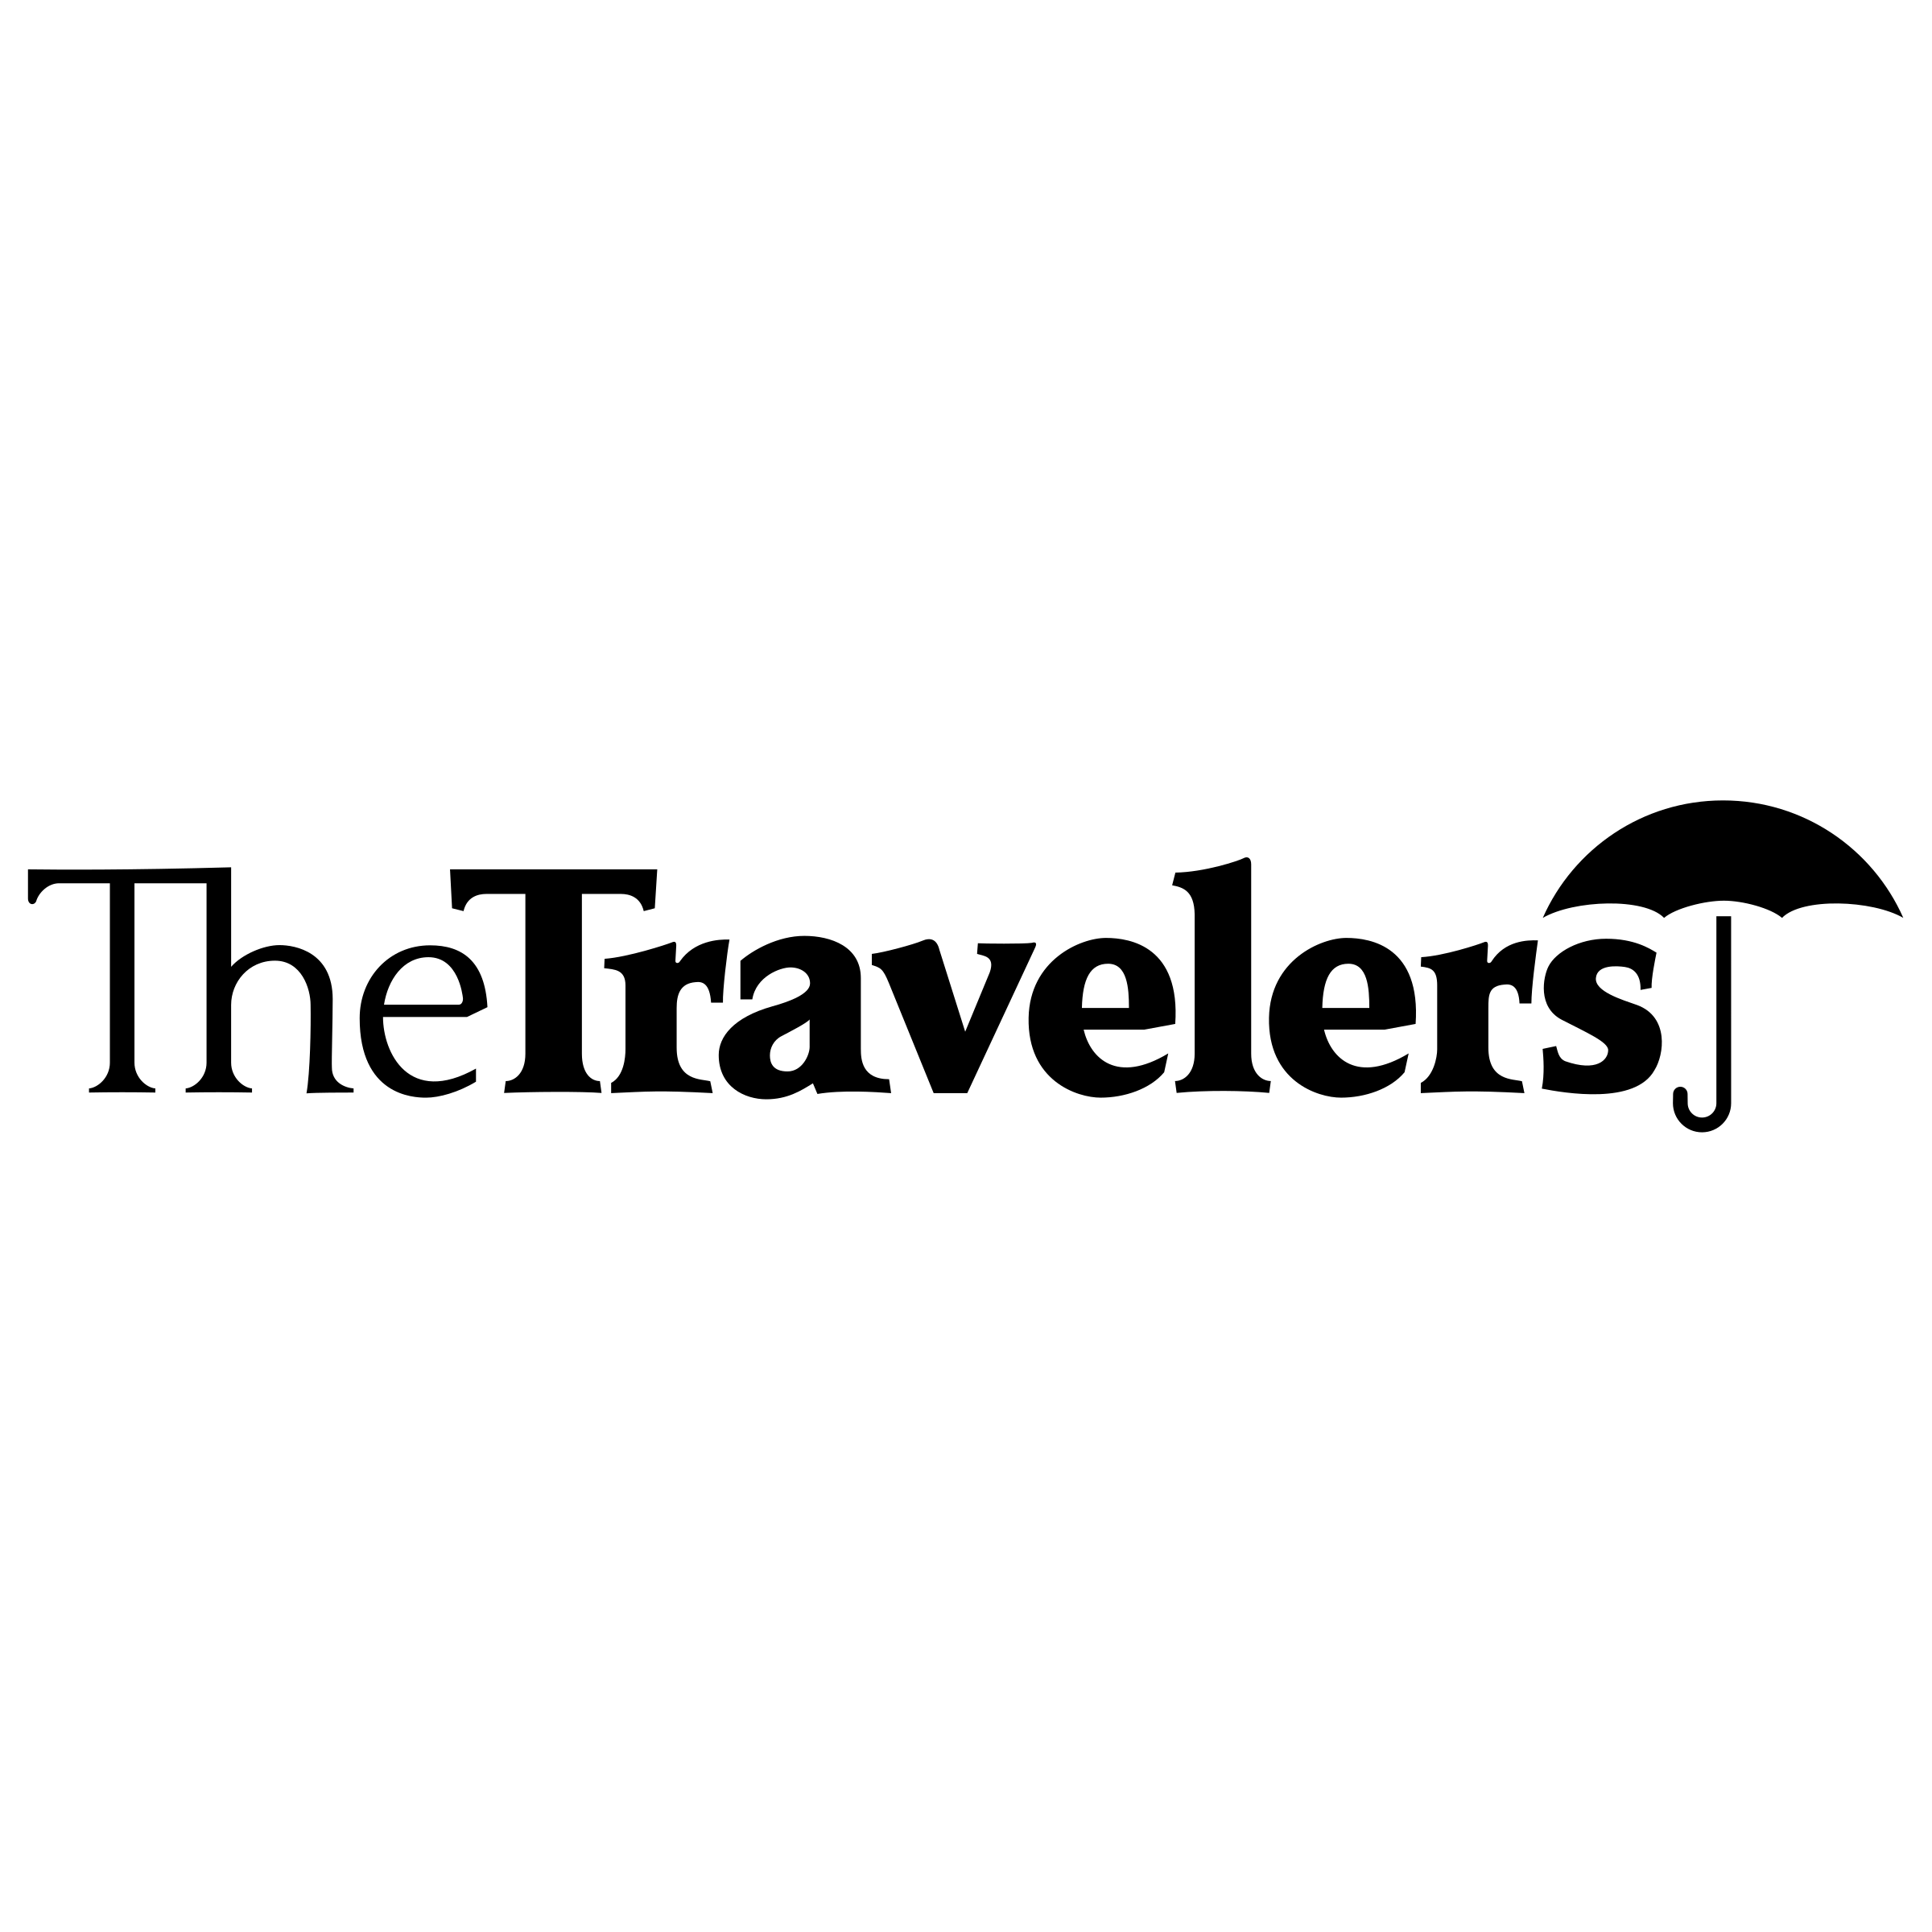 Travelers Logo - The Travelers Logo PNG Transparent & SVG Vector - Freebie Supply